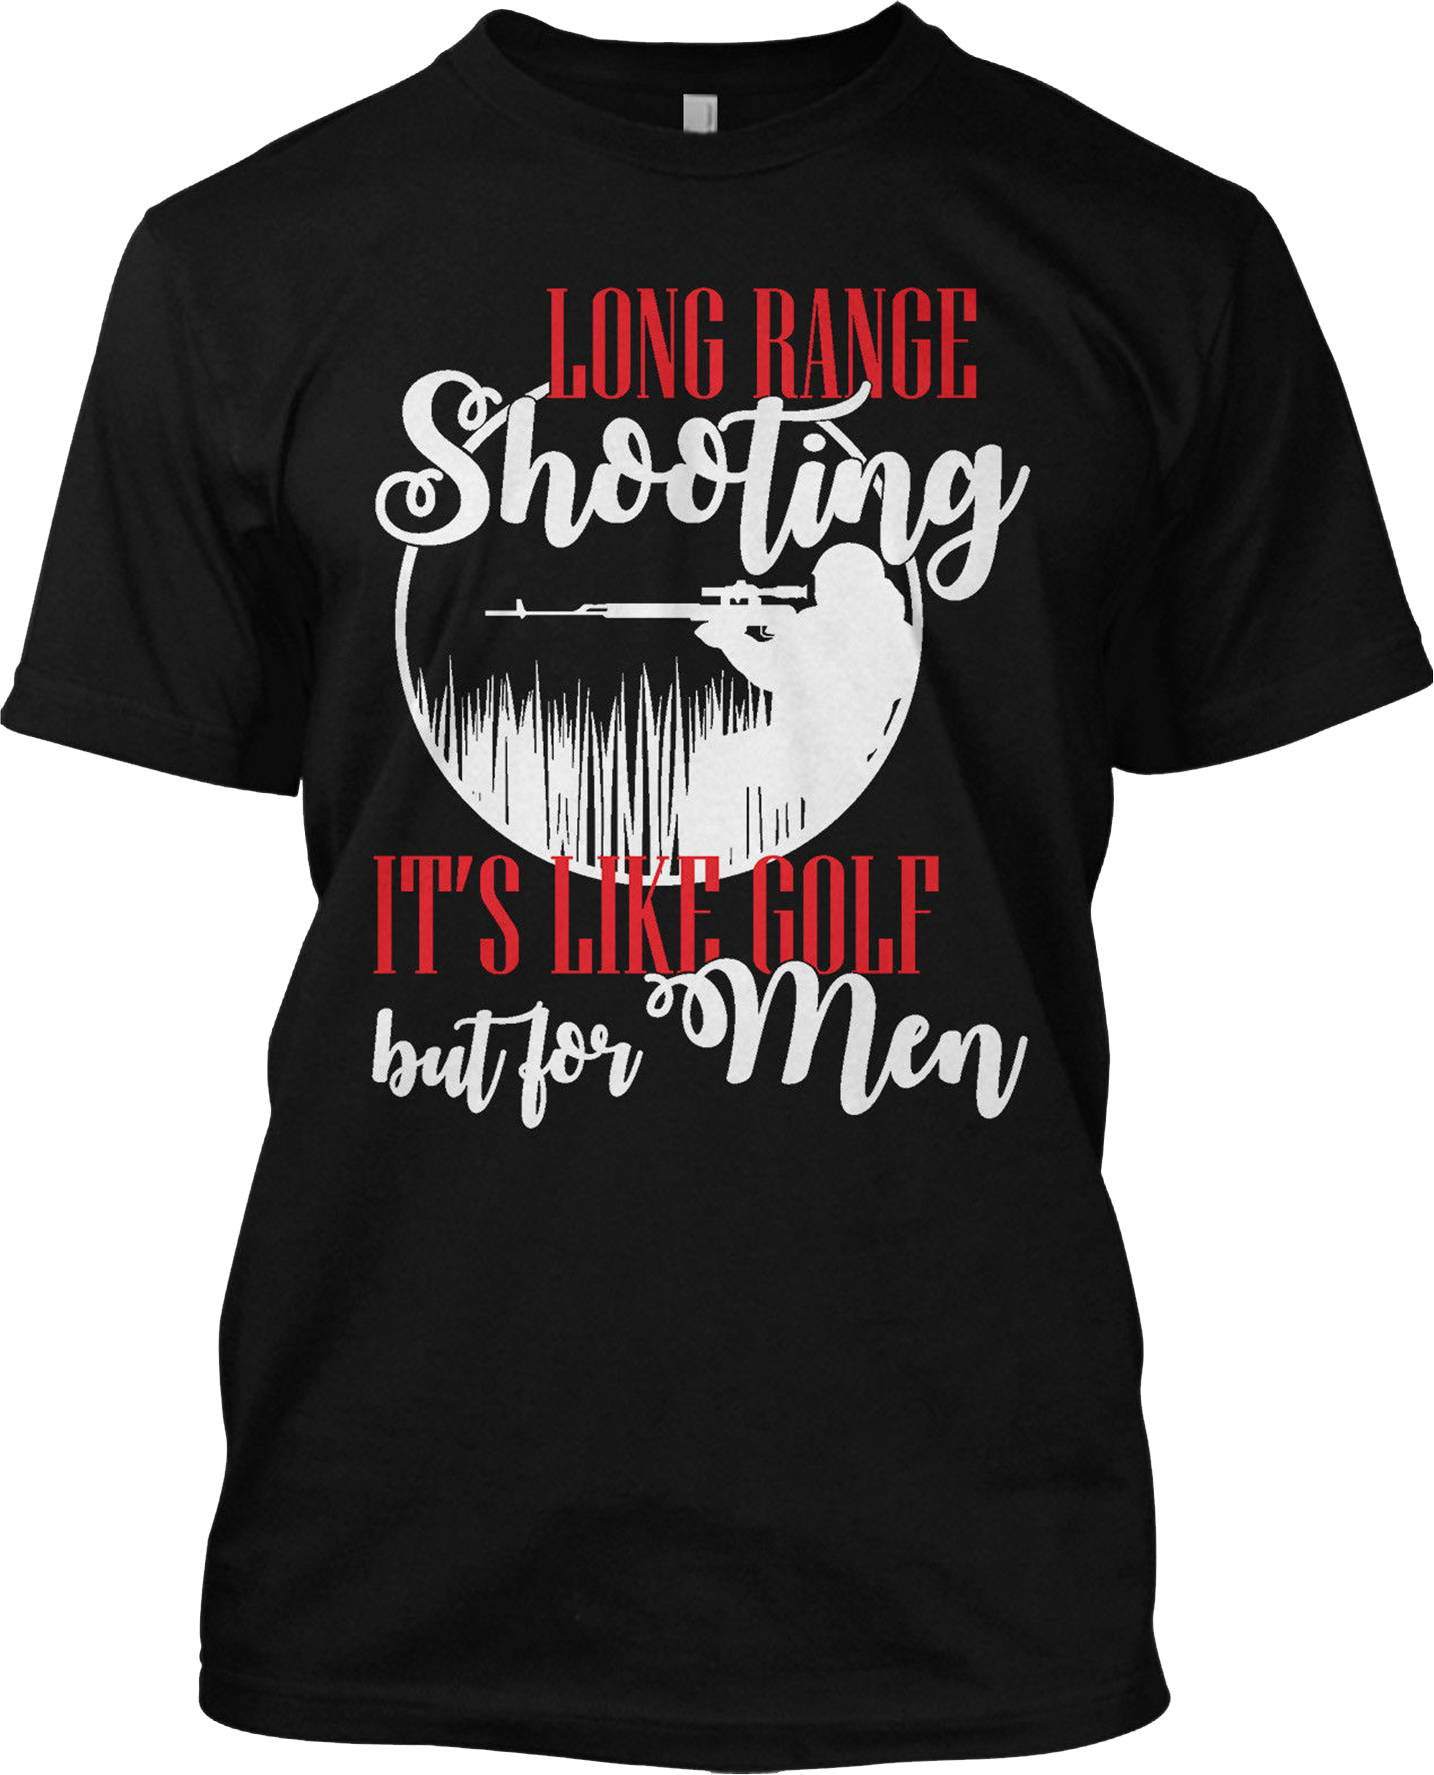 Long Range Shooting Like Golf Funny T Shirt But For Men Graphic Tee